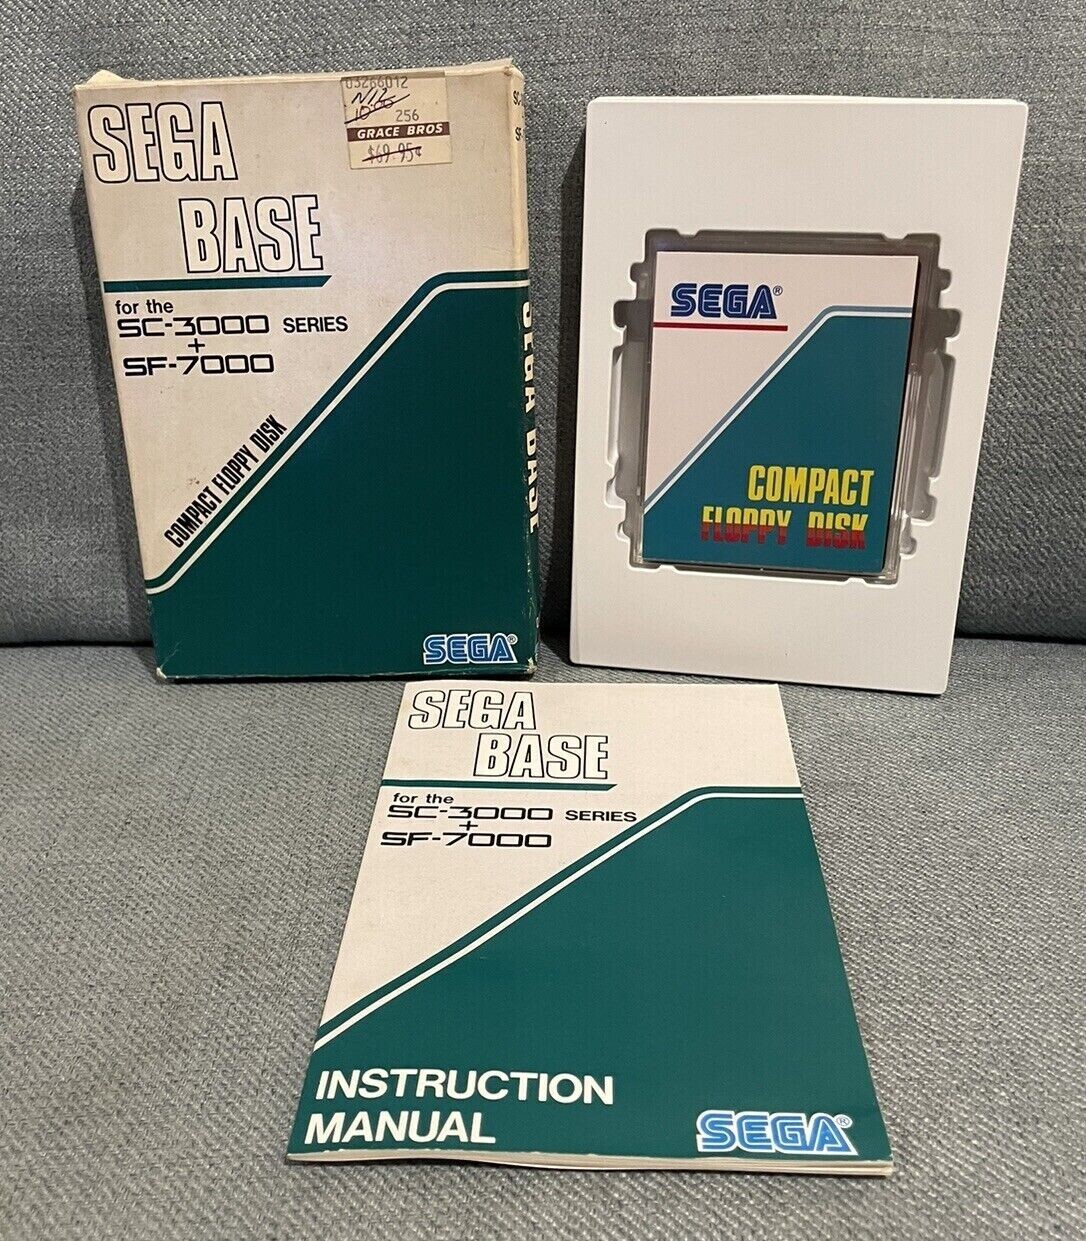  Sega SG X000 SF-7000 Compact Floppy Disk